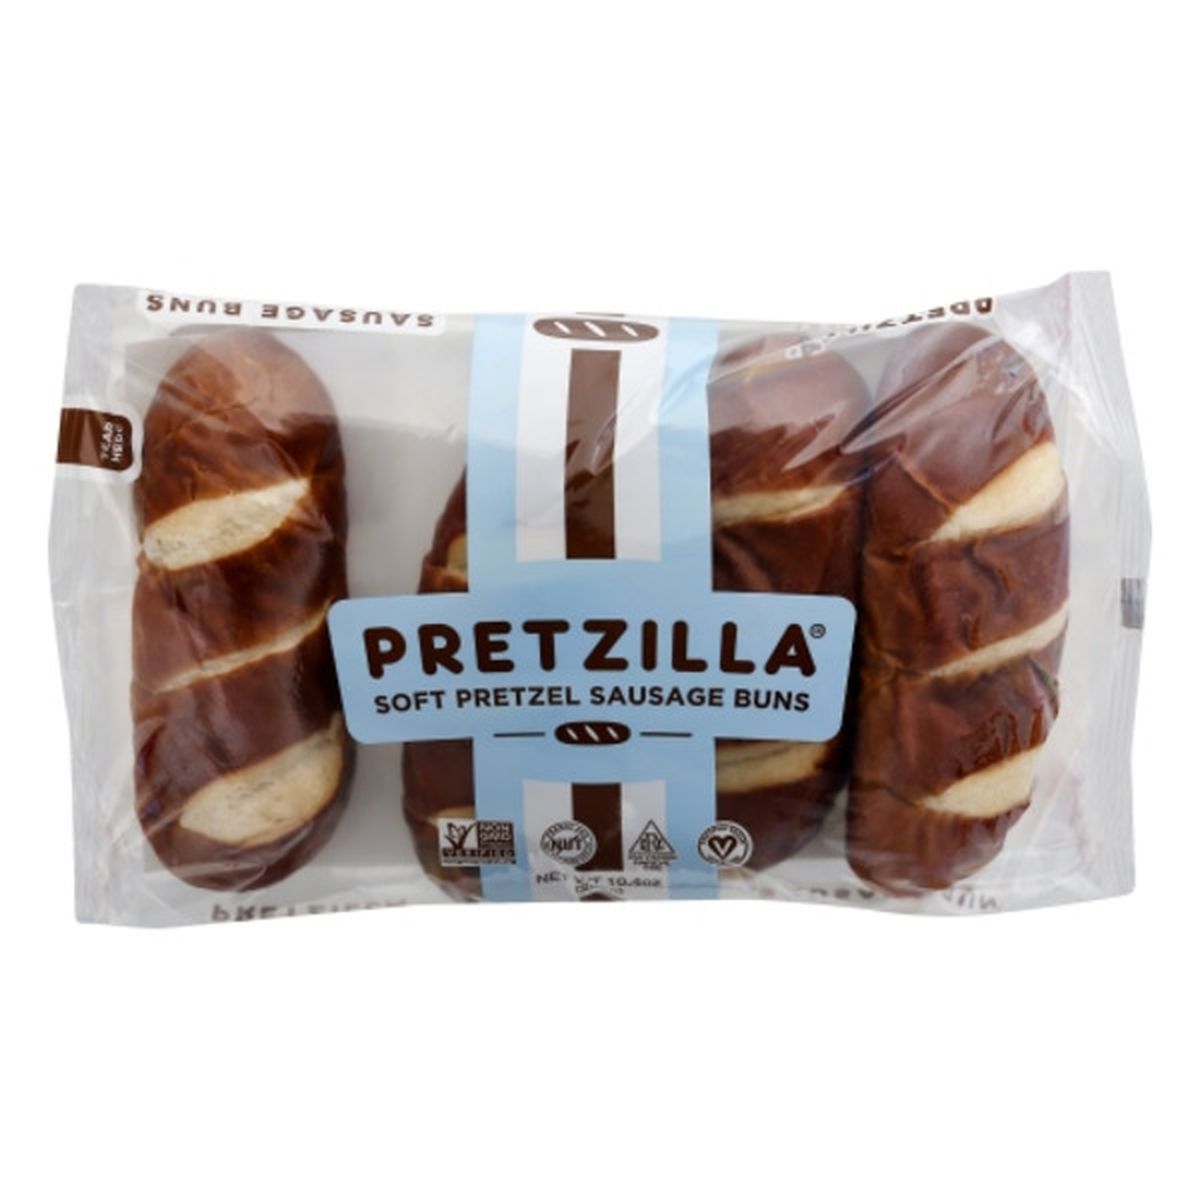 Calories in Pretzilla Sausage Buns, Soft Pretzel